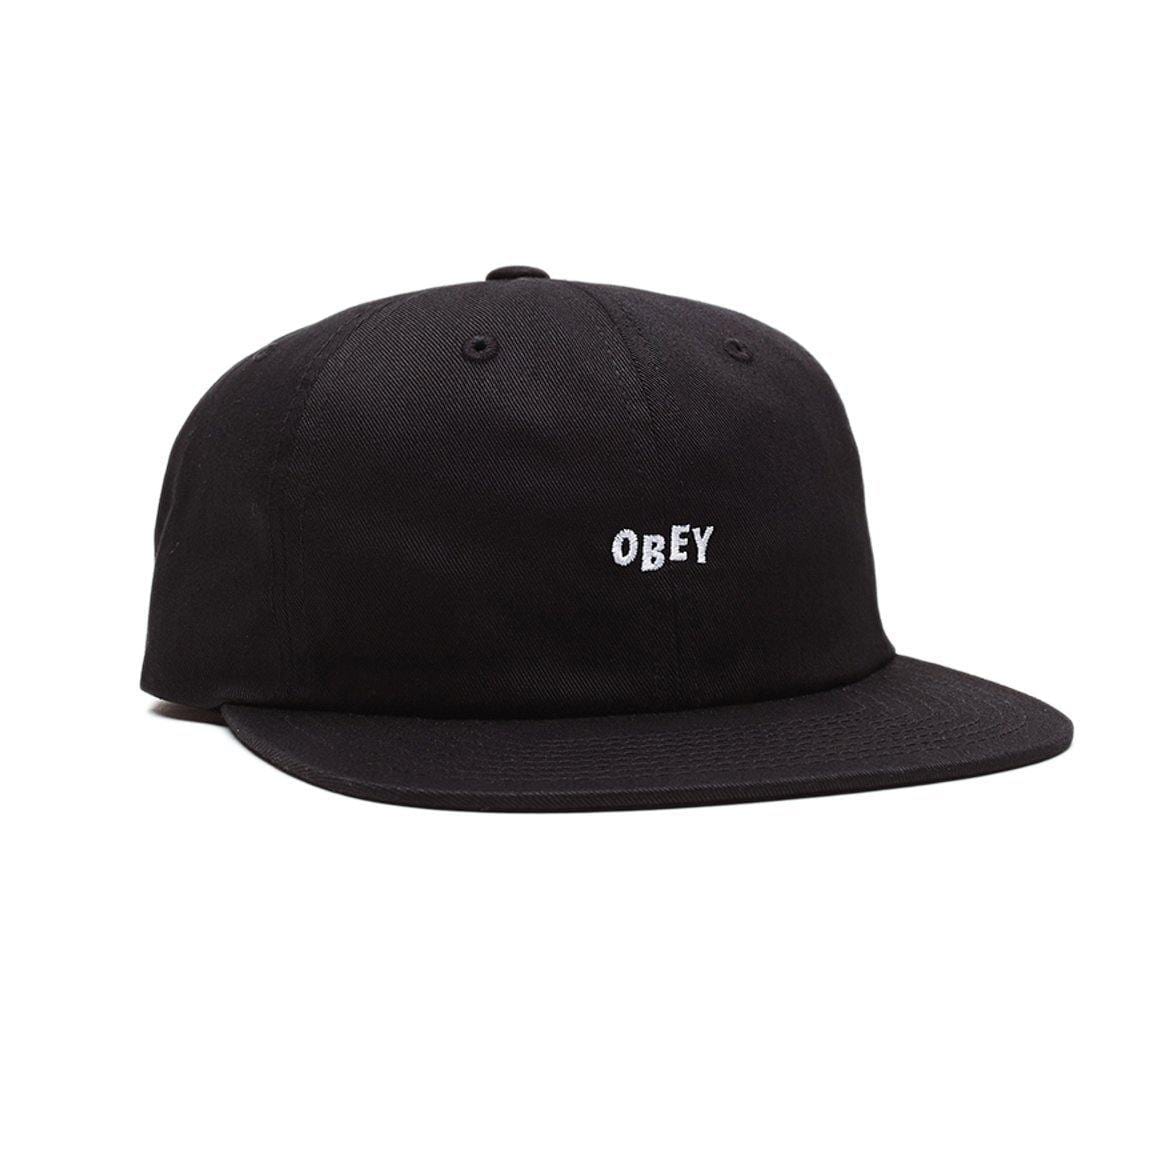 OBEY JUMBLED 6 PANEL STRAPBACK - Chirico Store - Cappelli, Cappelli con visiera, nero, Obey - Obey